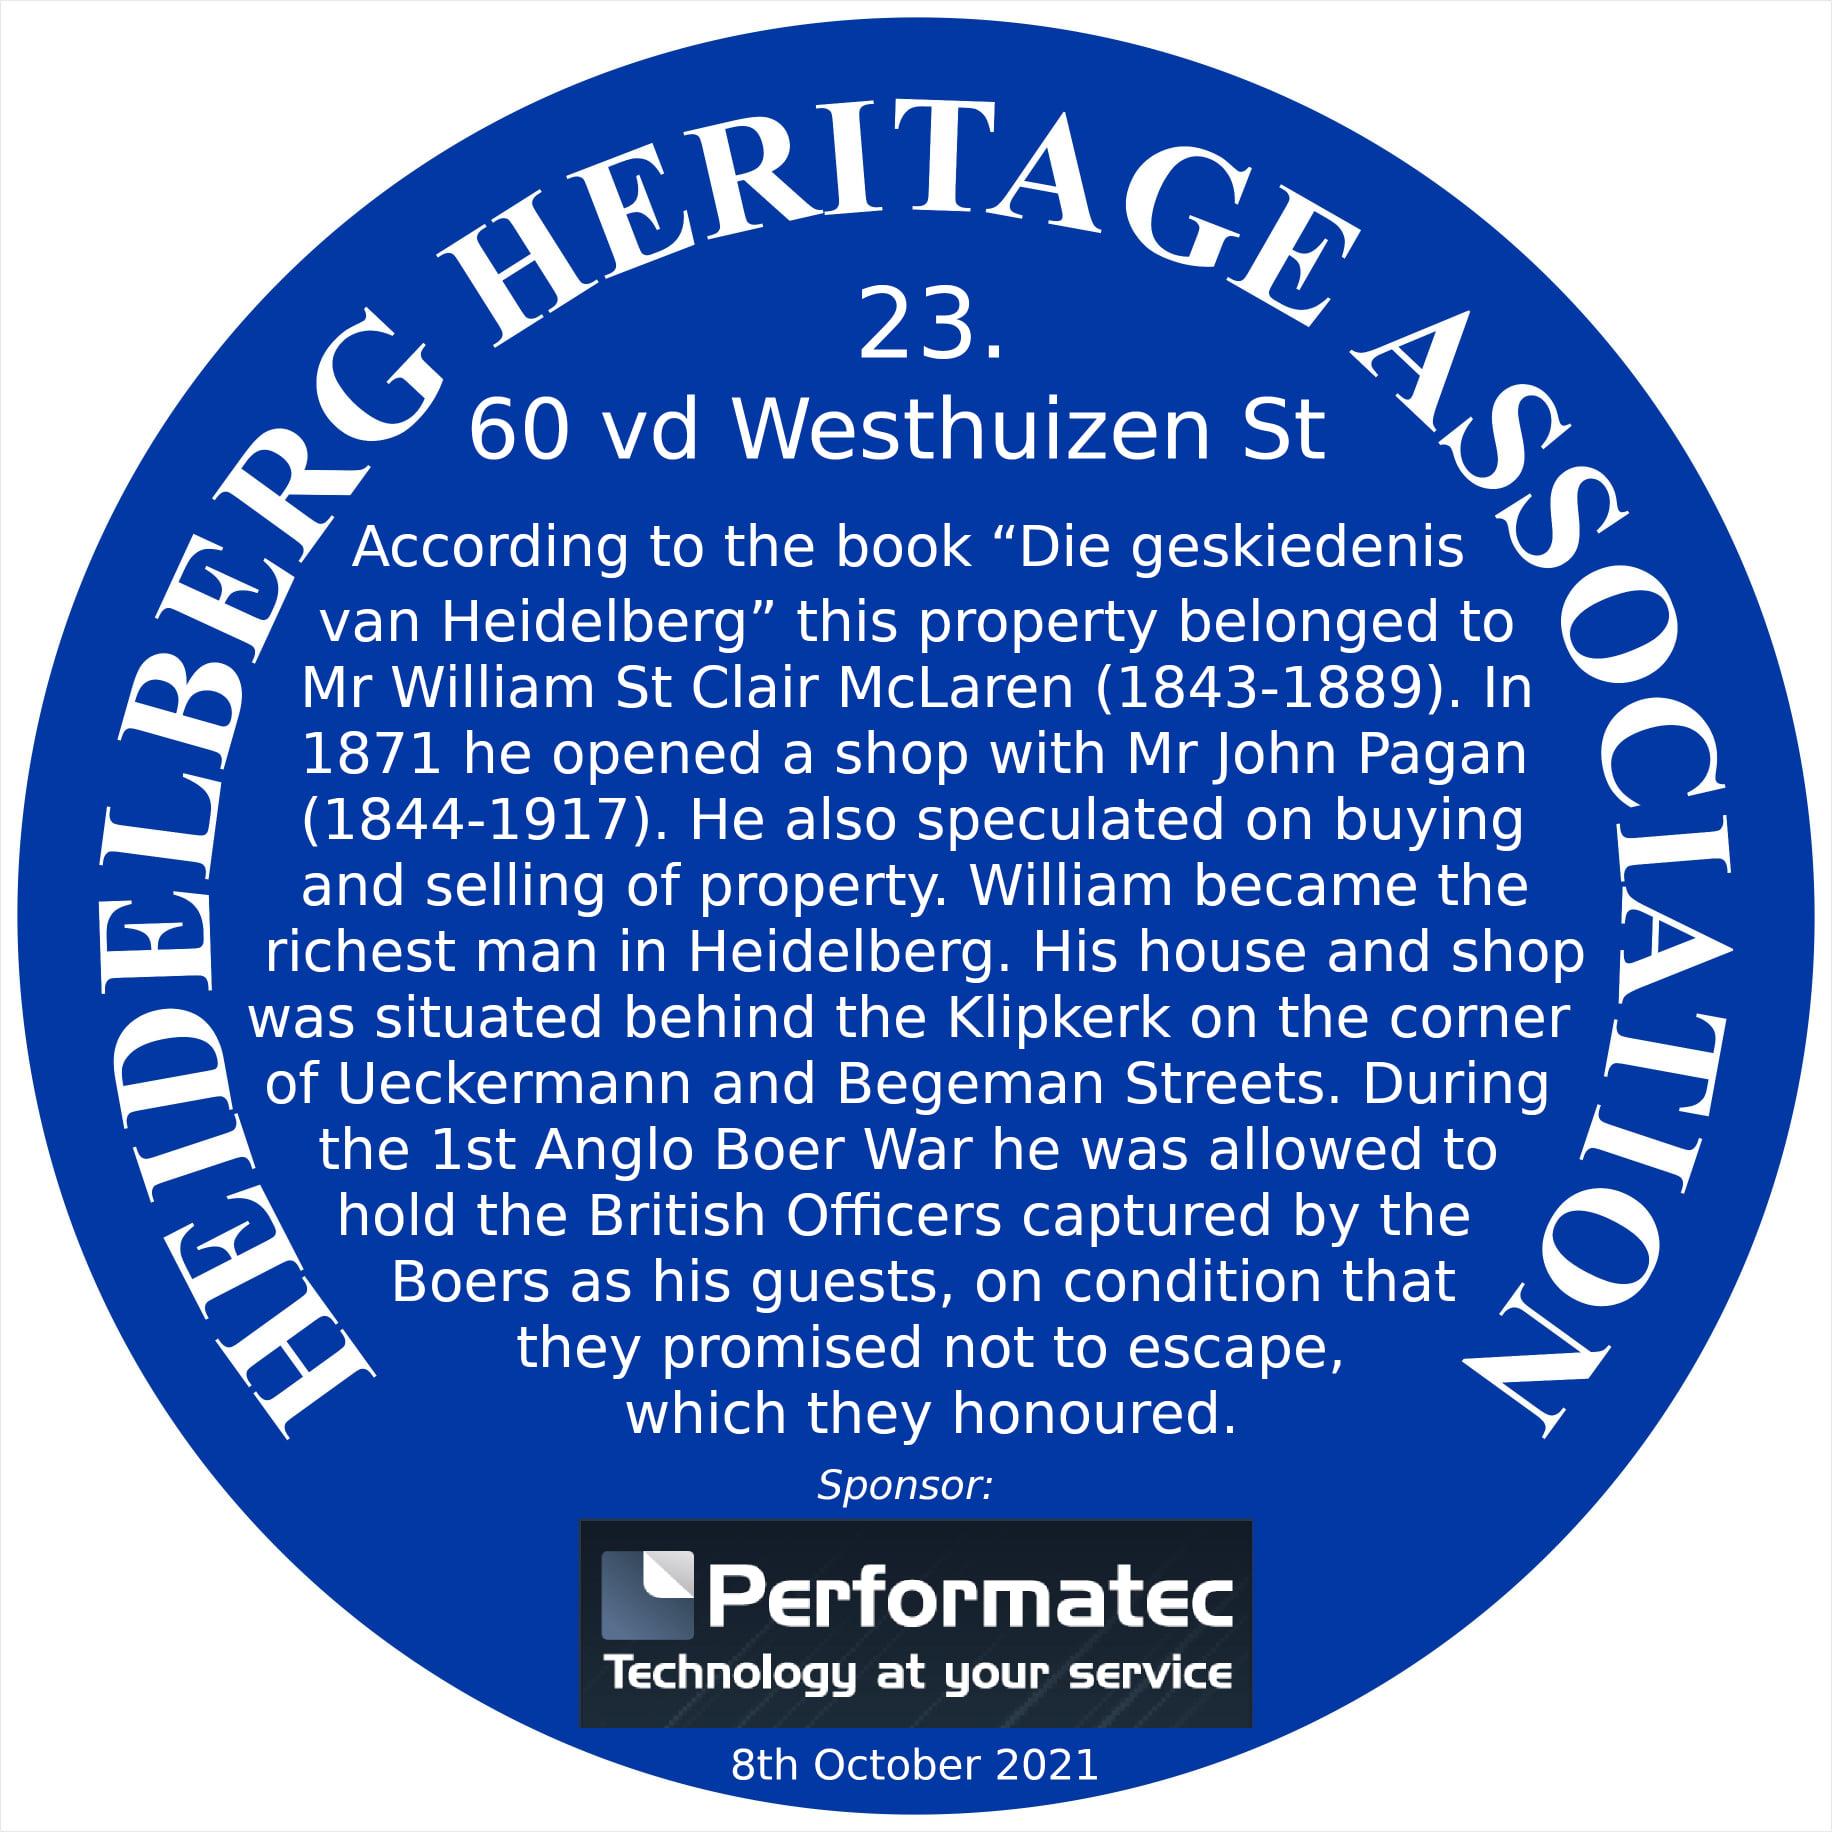 Blue Plaque 23 Heidelberg Heritage Association - 60 vd Westhuizen Street